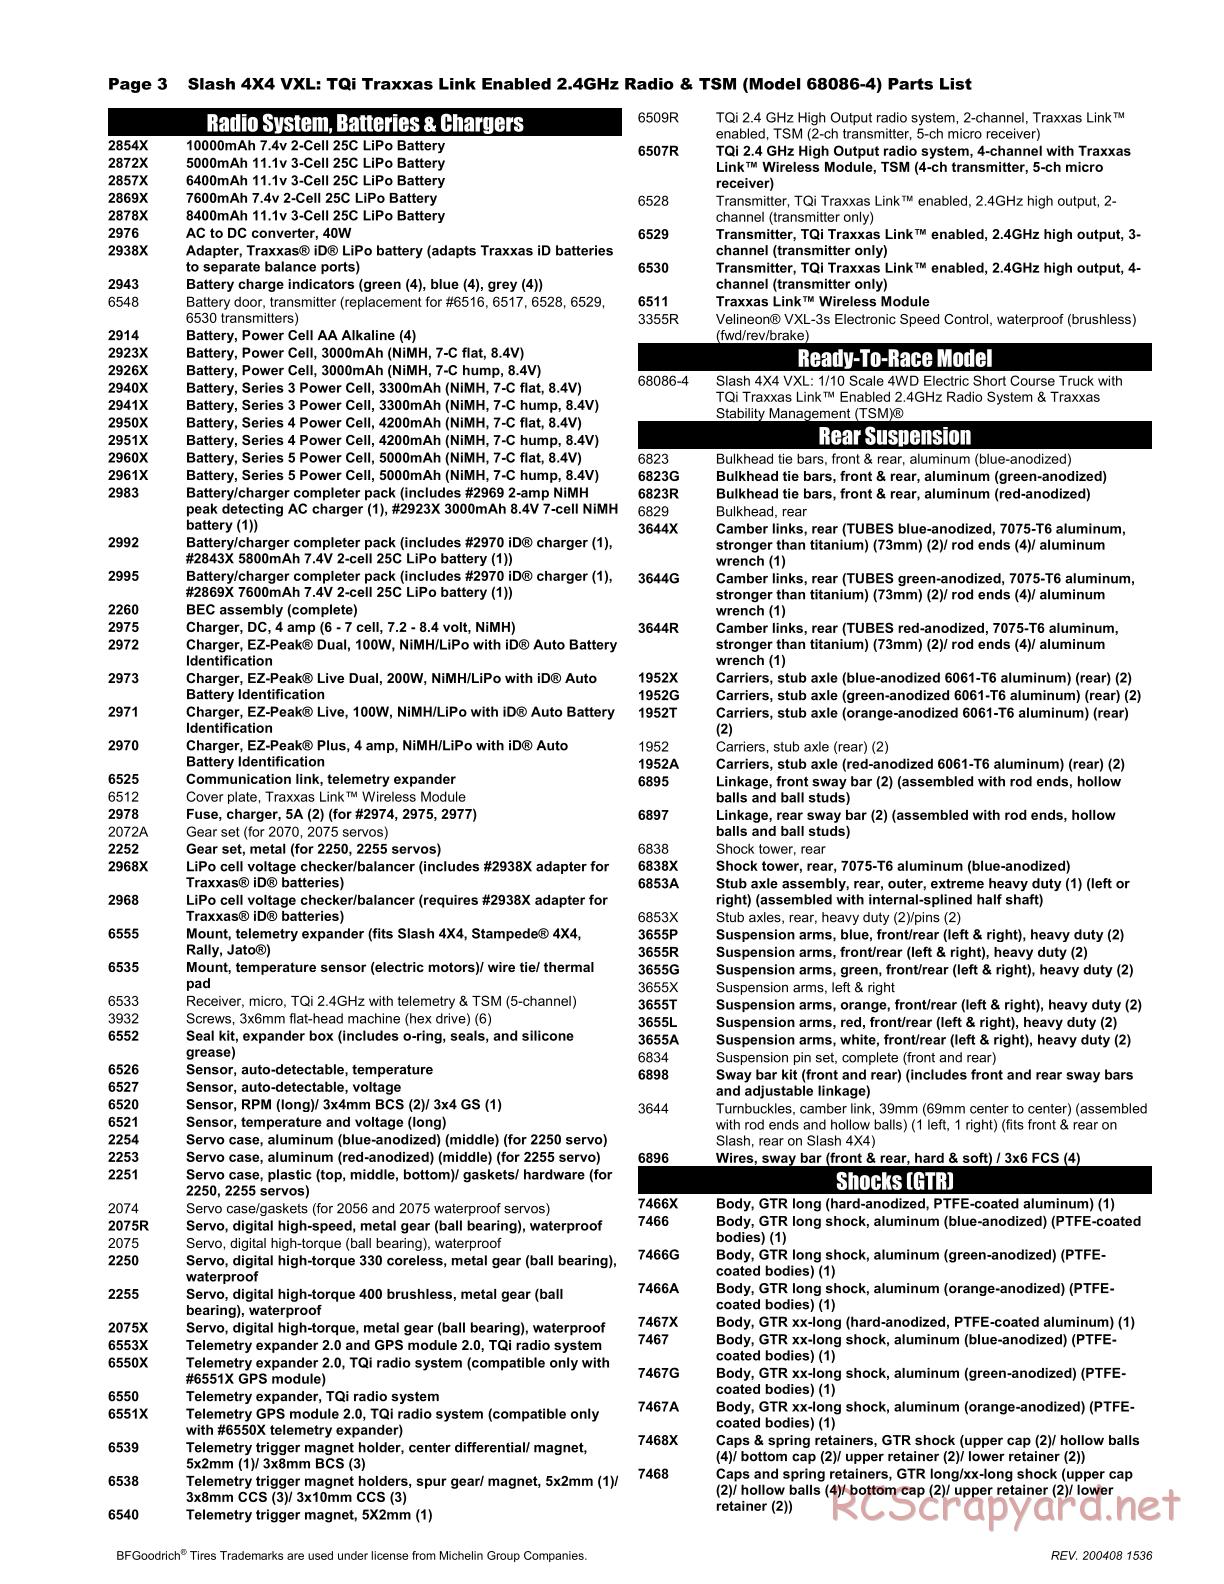 Traxxas - Slash 4x4 VXL - Parts List - Page 3